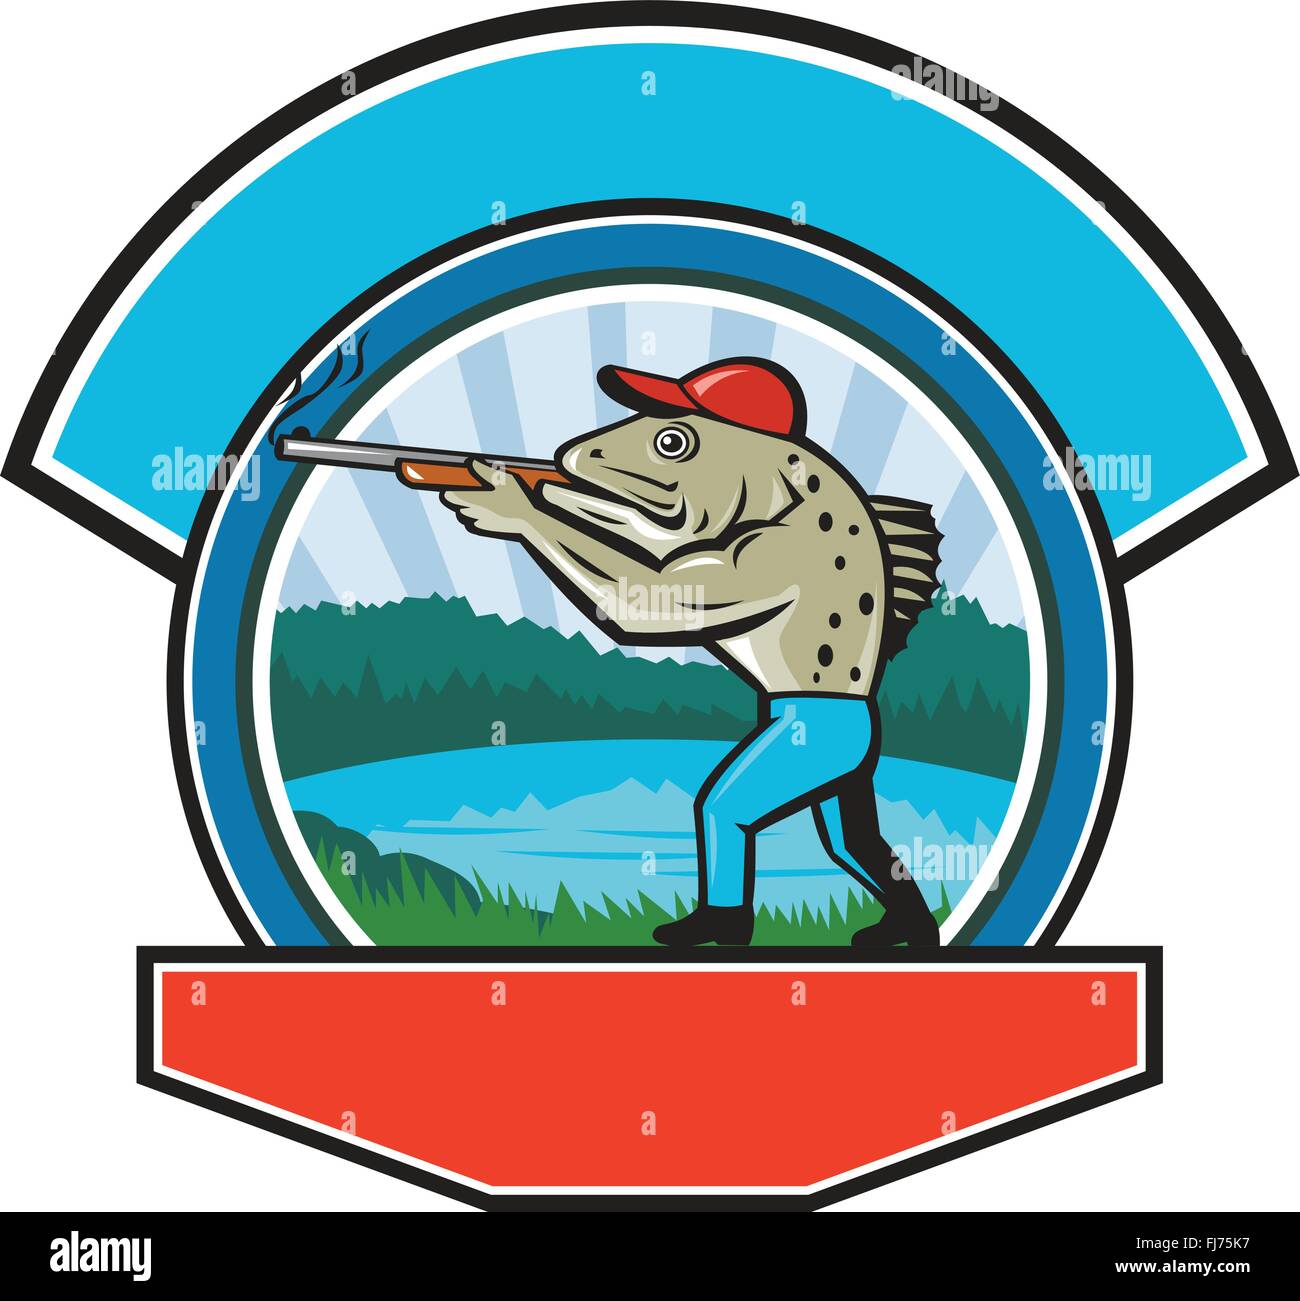 each-grouse499: fish hunter image